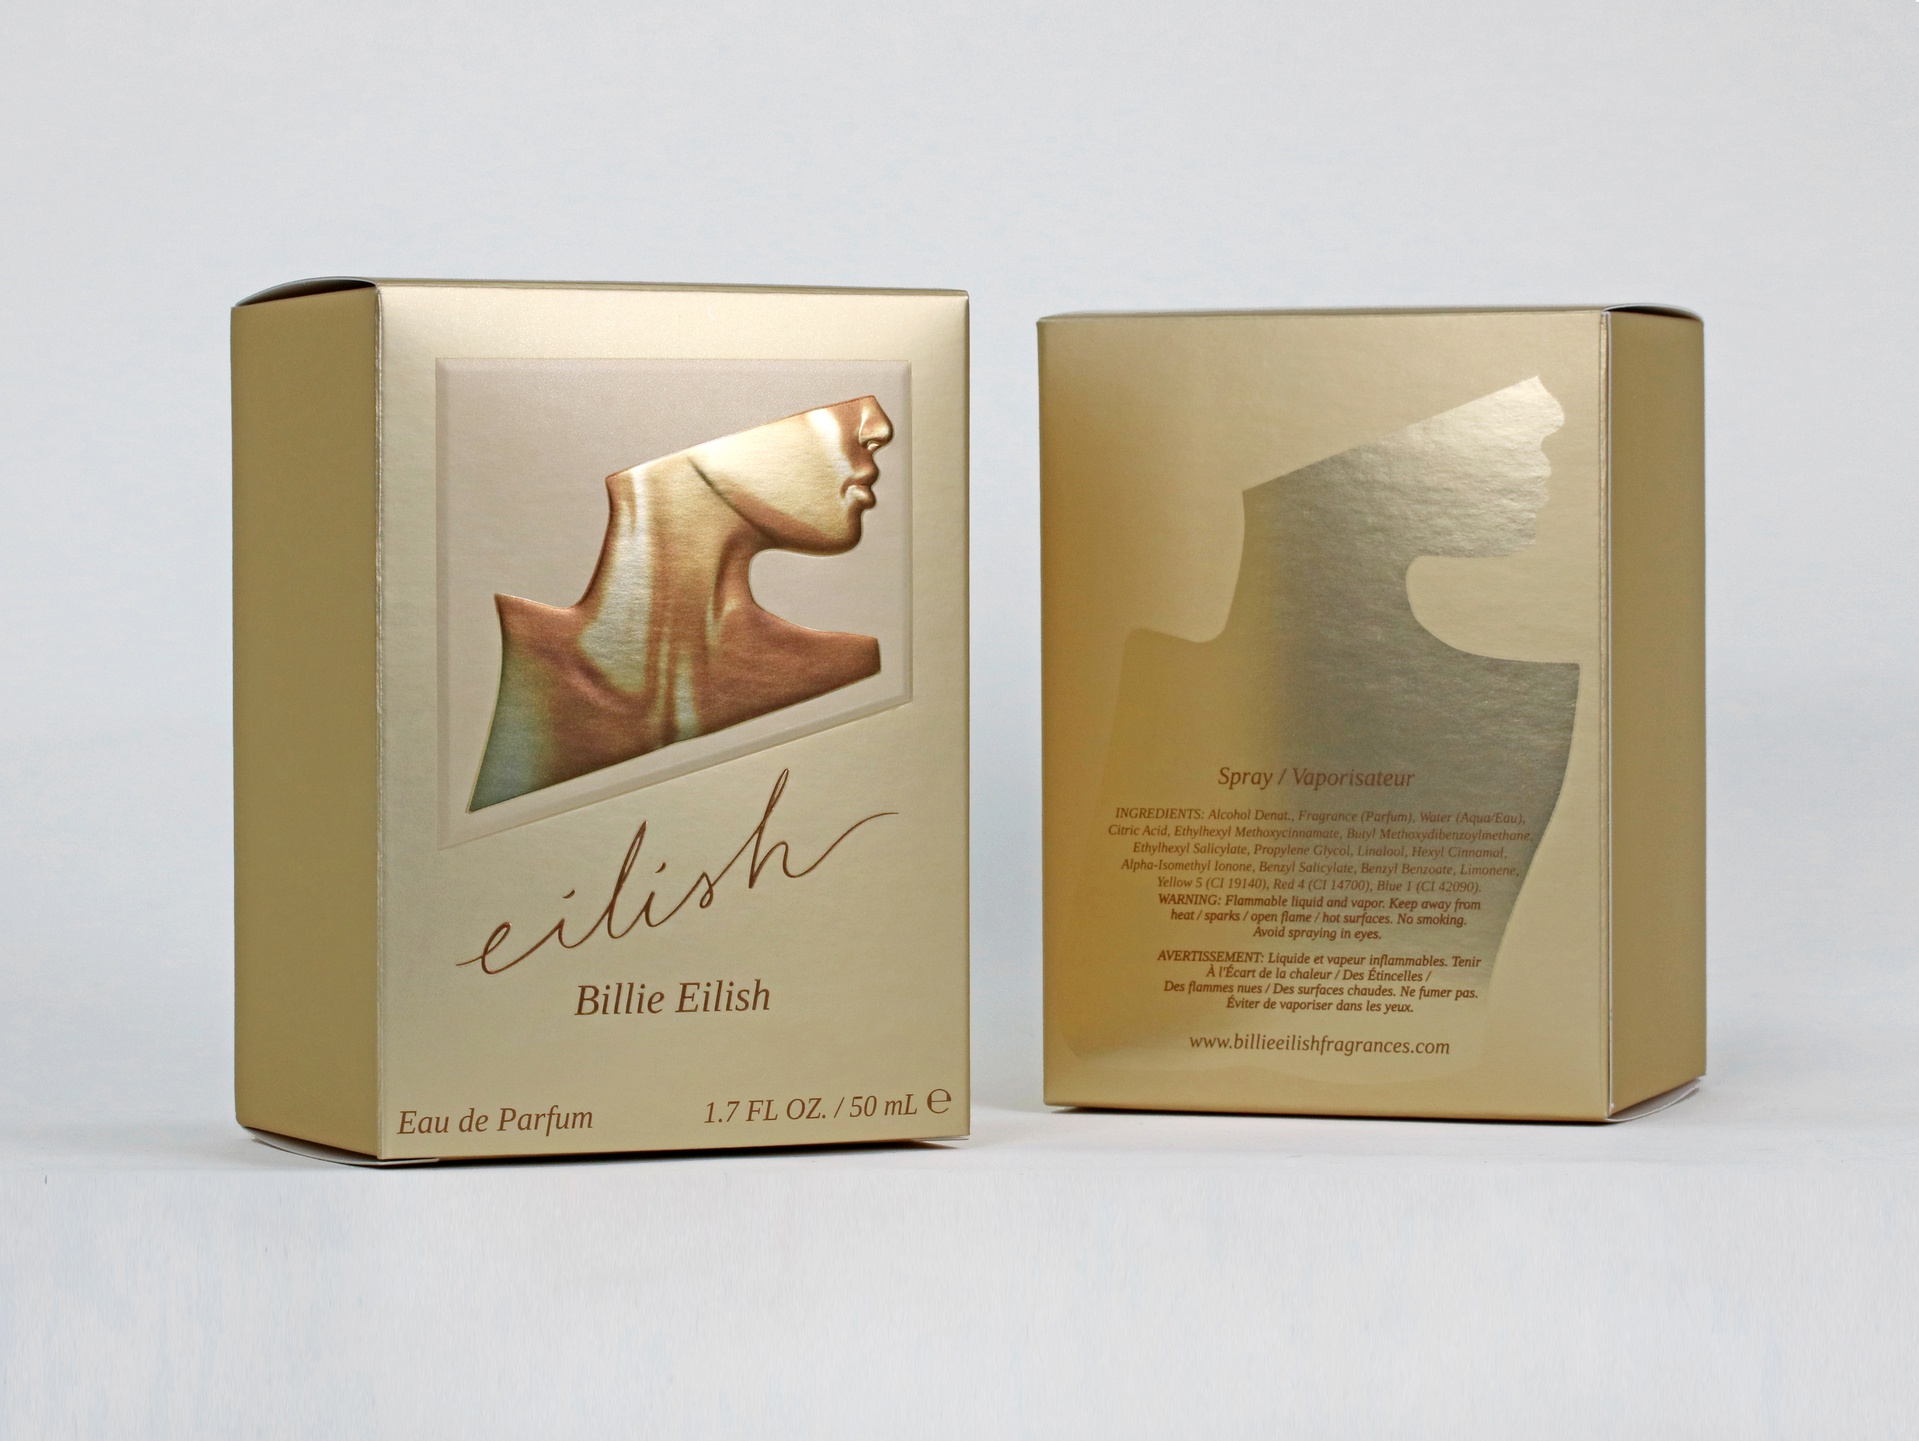 Billie Eilish folding cartons